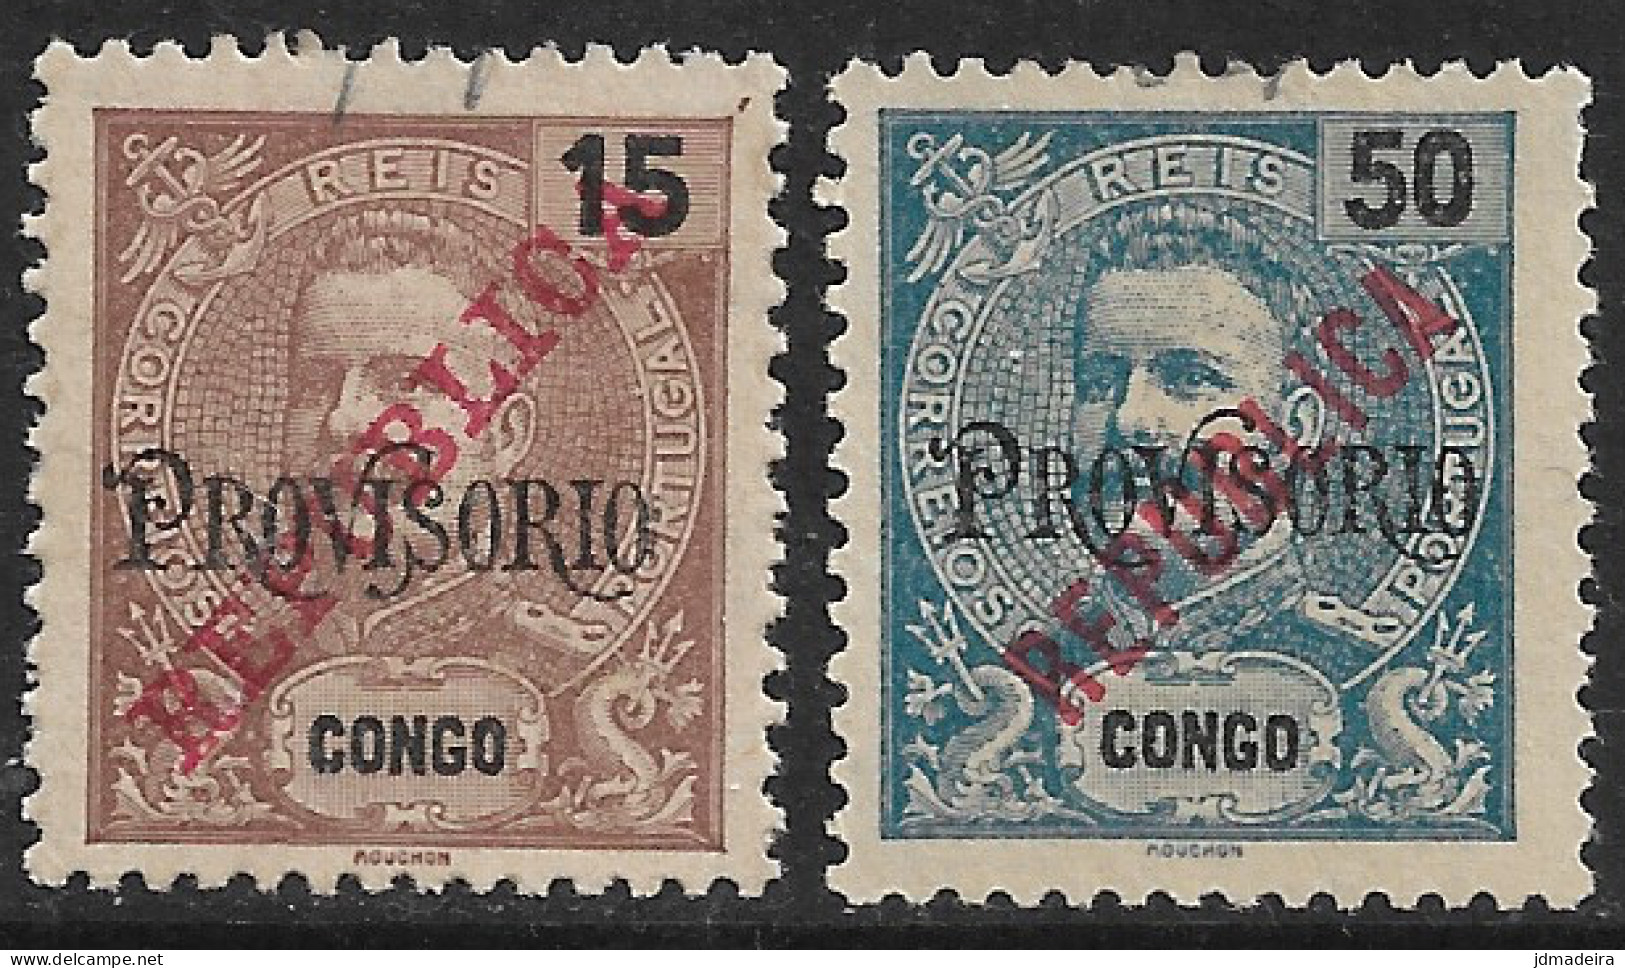 Portuguese Congo – 1915 King Carlos Overprinted PROVISORIO And REPUBLICA Used Set - Portugiesisch-Kongo